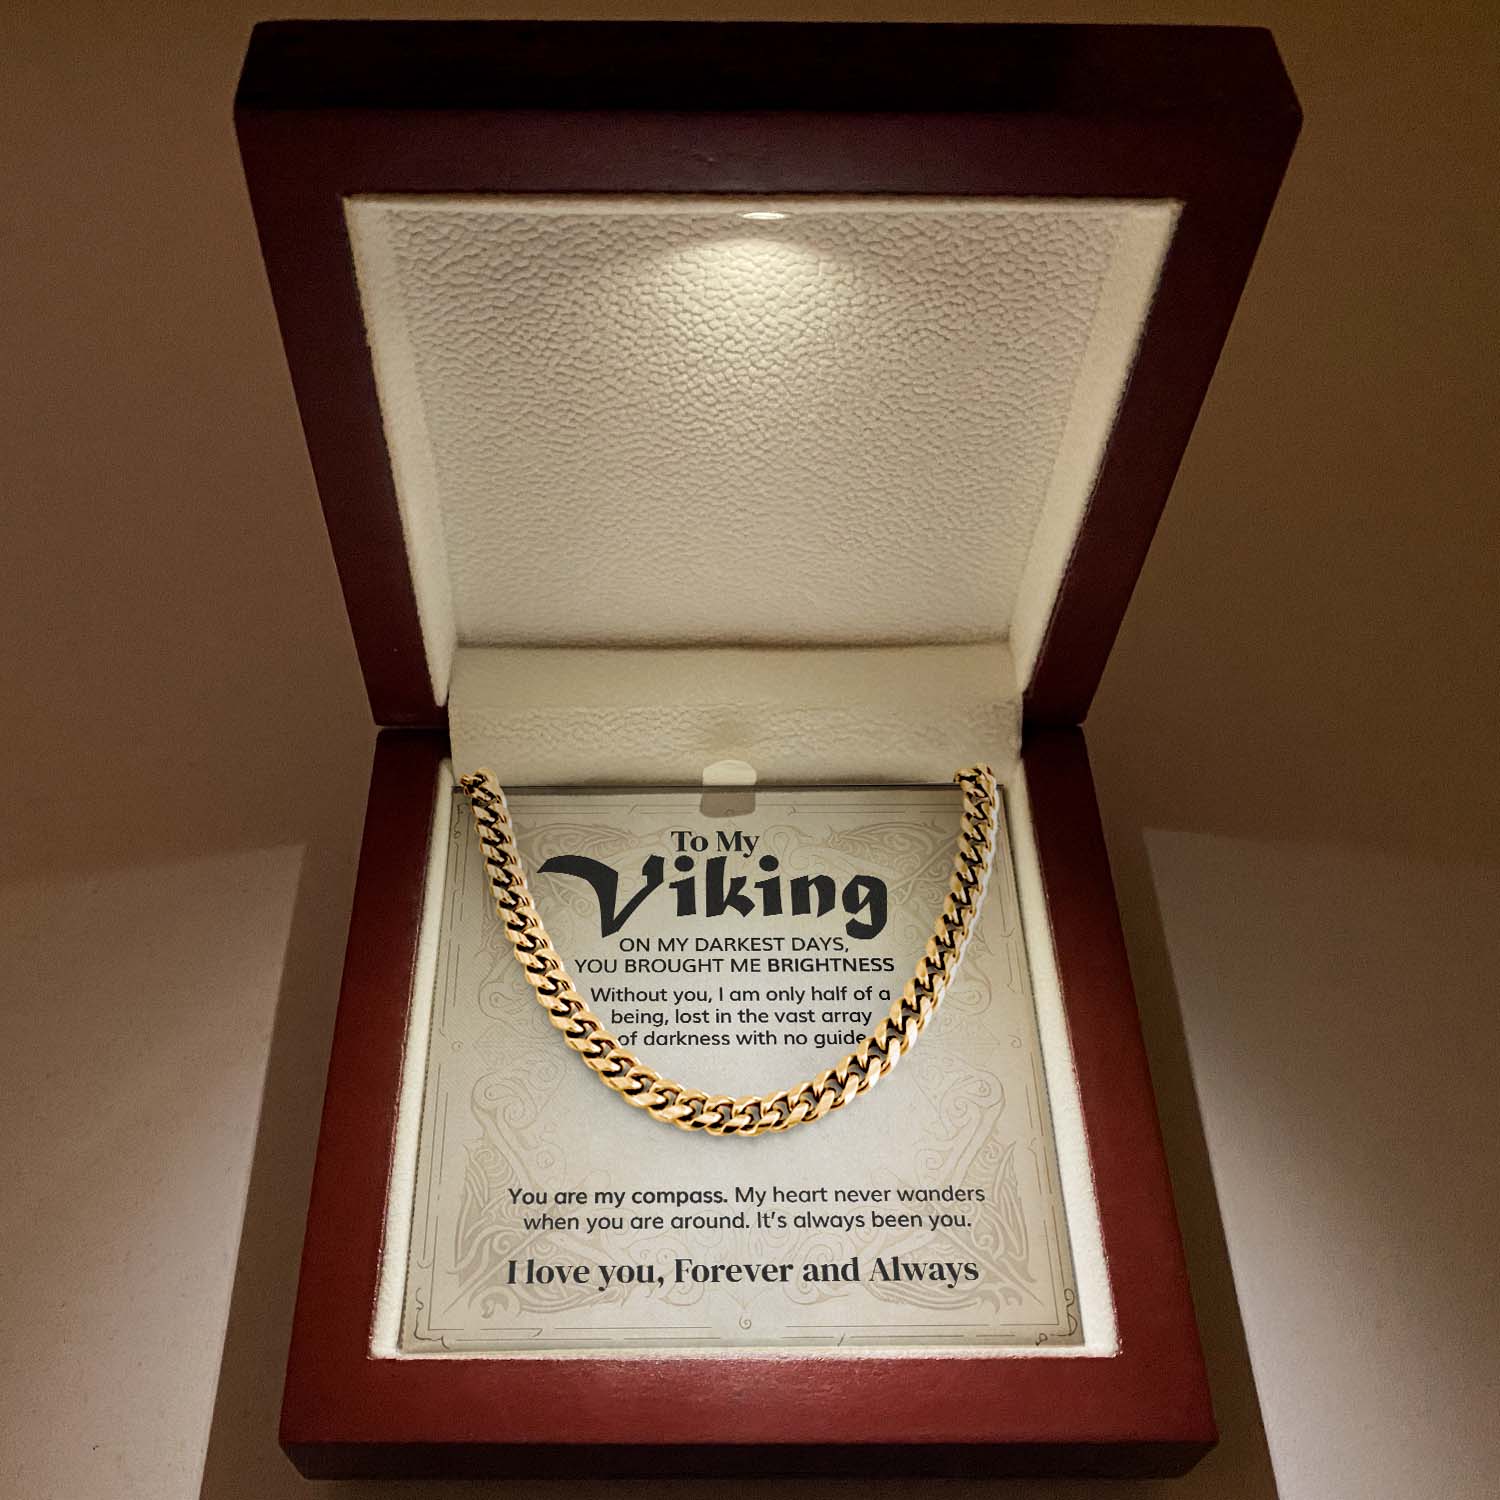 ShineOn Fulfillment Jewelry 14K Yellow Gold Finish / Luxury LED Box To my Viking - You brought me brightness - Cuban Link Chain